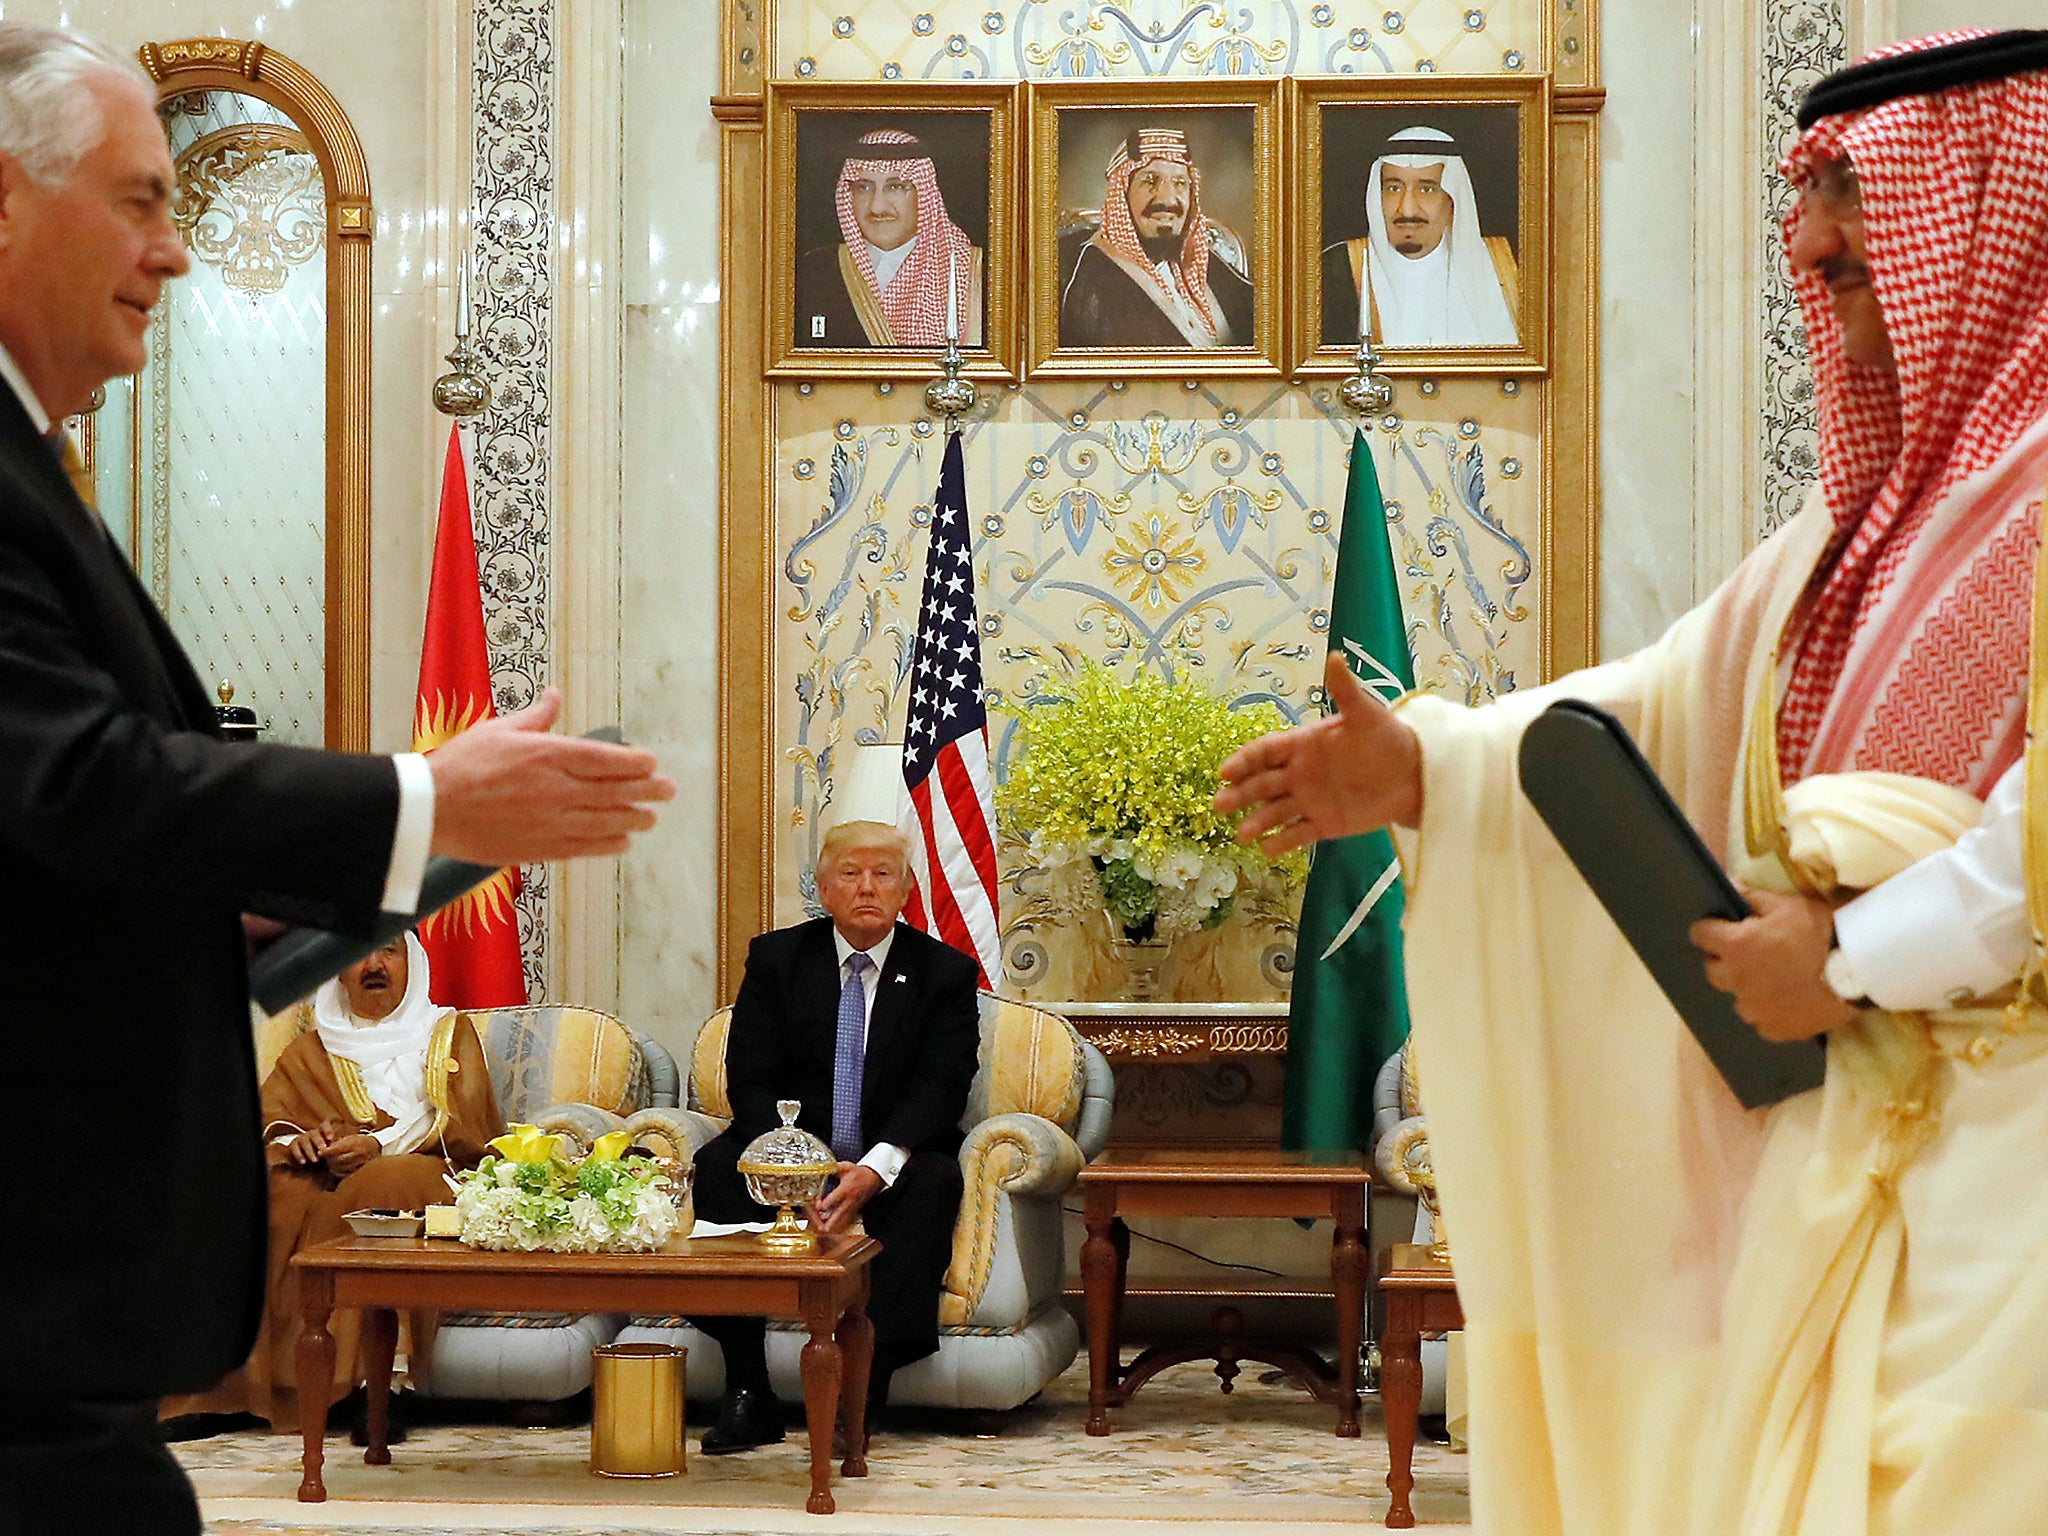 Donald Trump took credit on Twitter for Saudi Arabia's move against Qatar